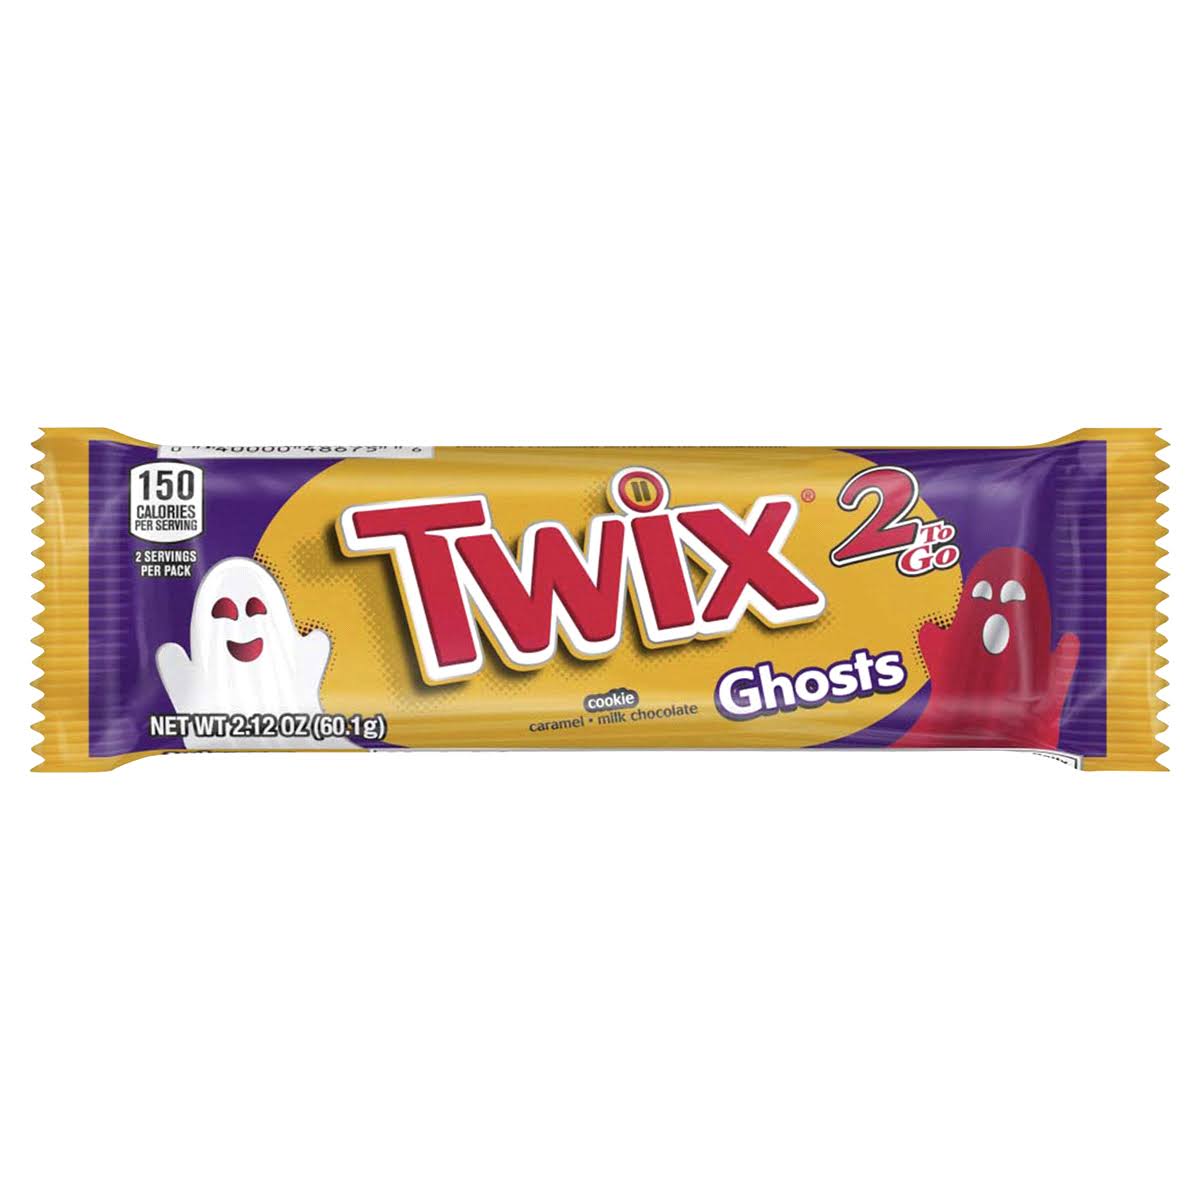 Twix Cookie, Ghosts, 2 To Go - 2.12 oz